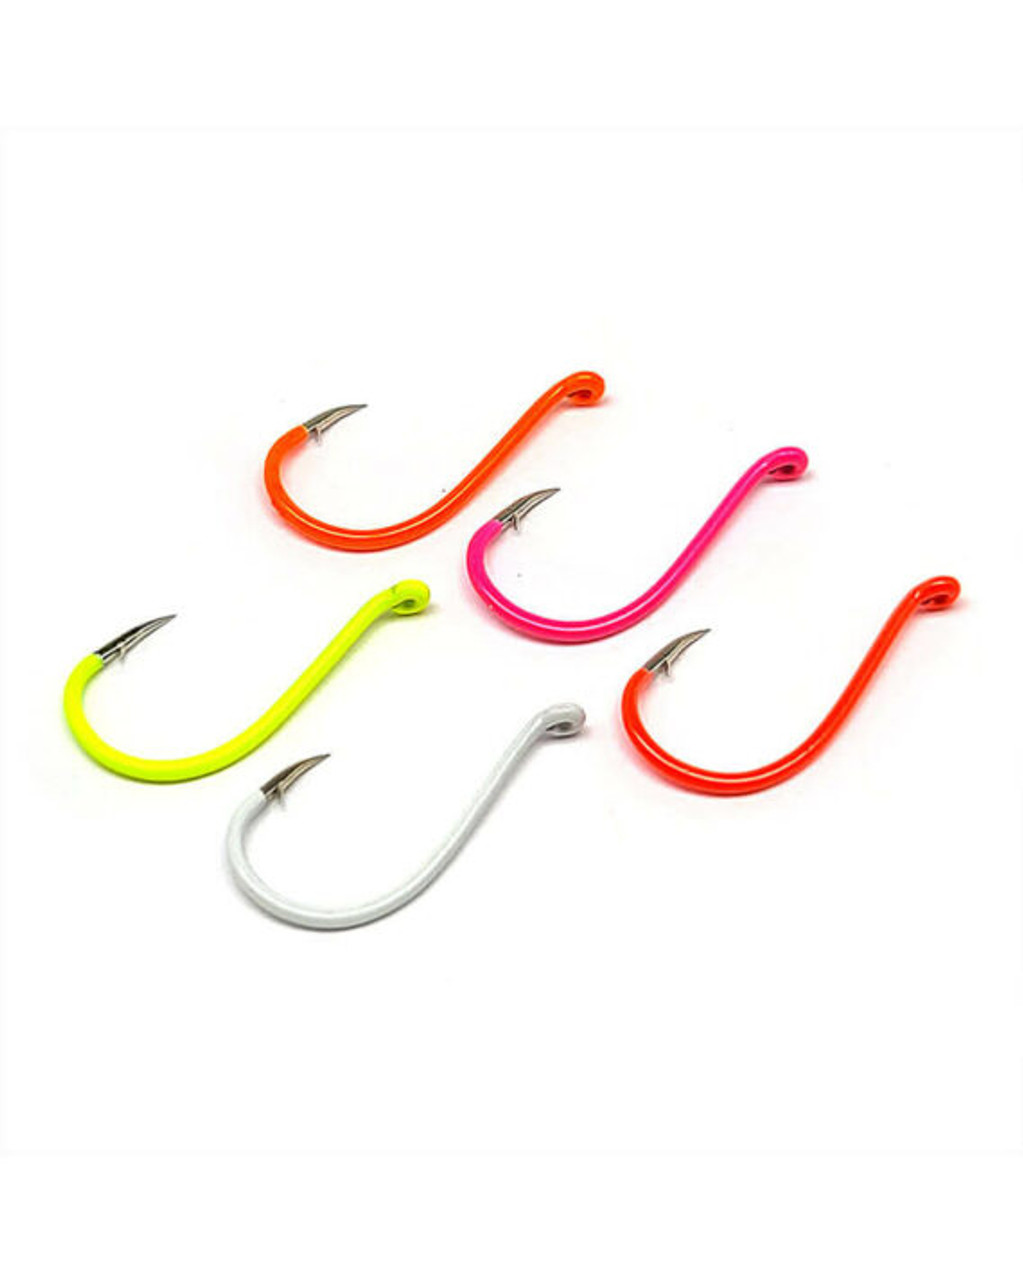 Gamakatsu Fluorescent Walleye and Steelhead Hook Assortment, Forged, Octopus, Red/Pink/Orange/Chartreuse/Glow, 20 per pack